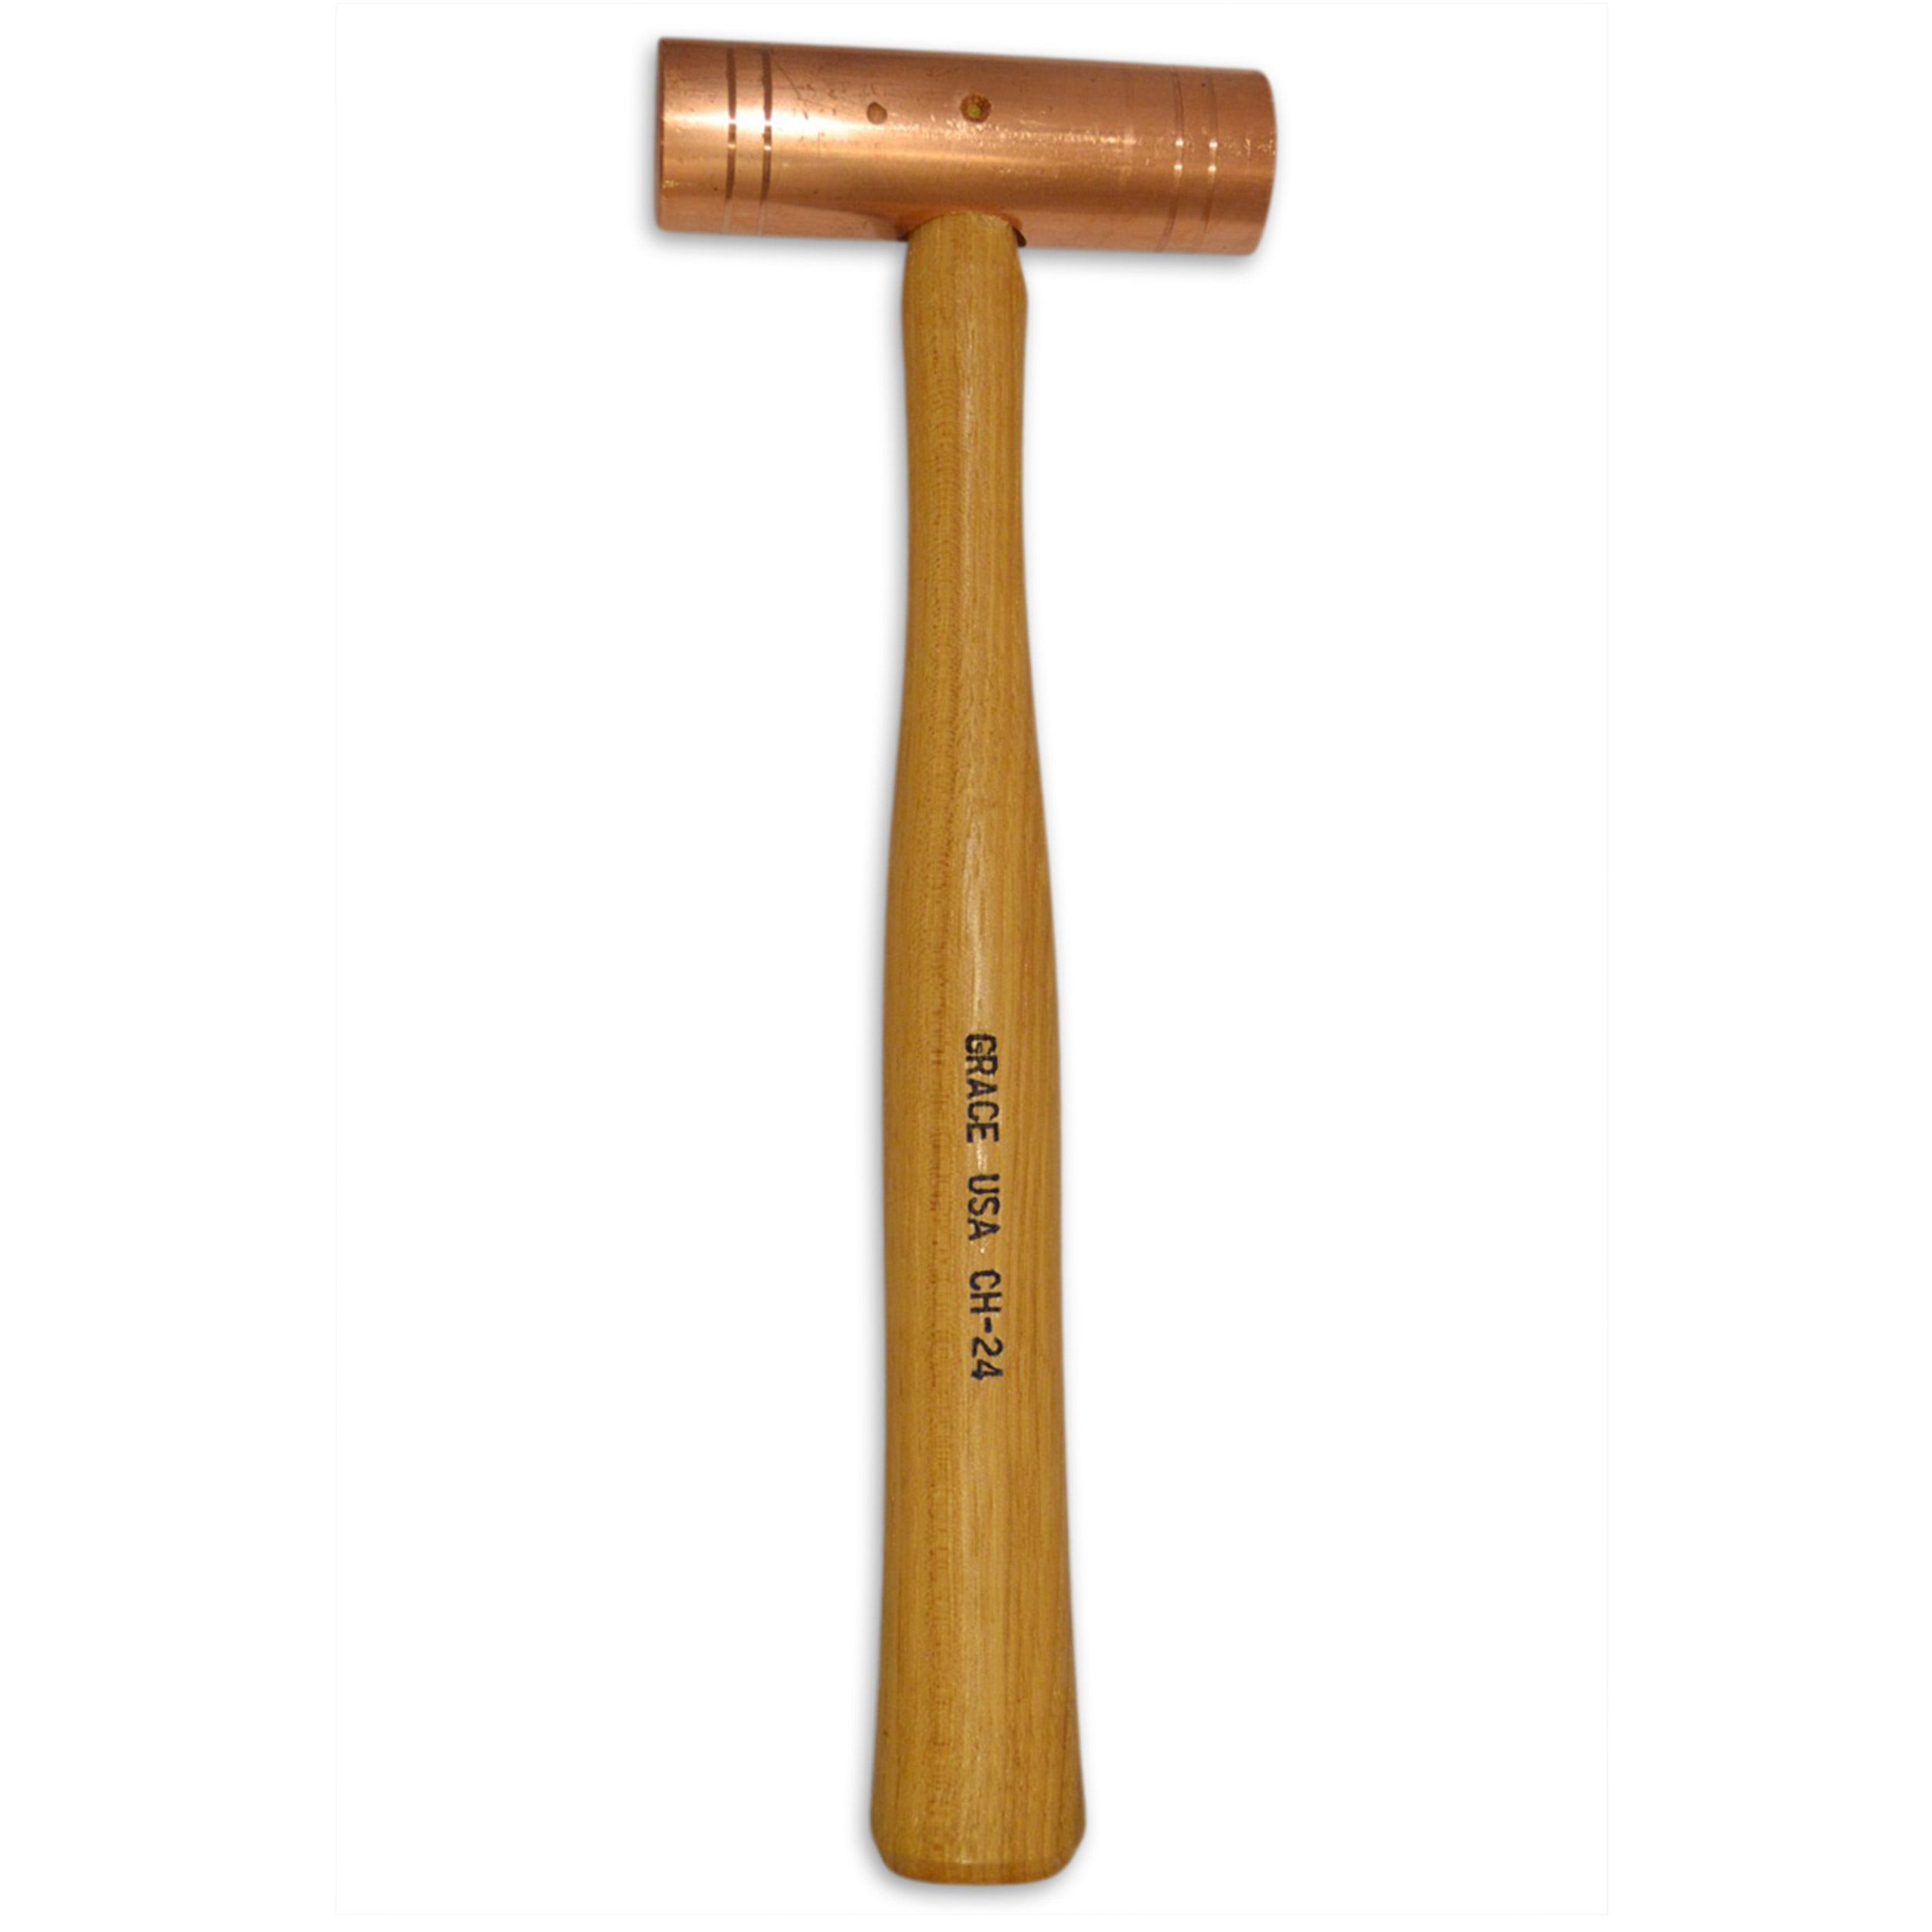 24 Oz Copper Hammer